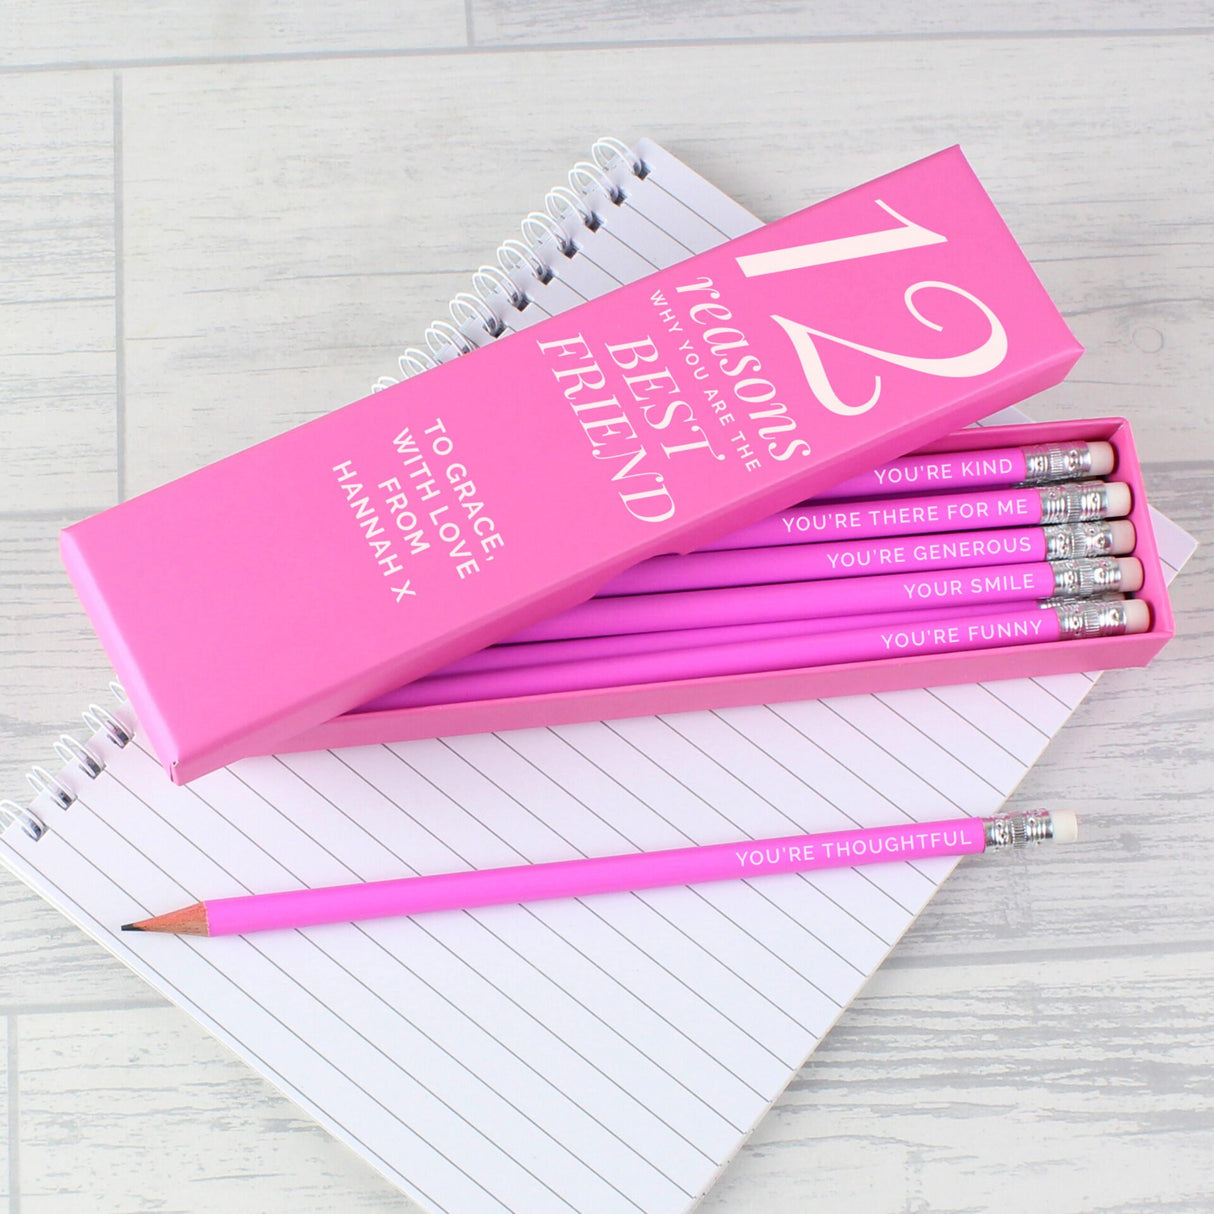 12 Reasons Box and 12 Pink HB Pencils - Gift Moments